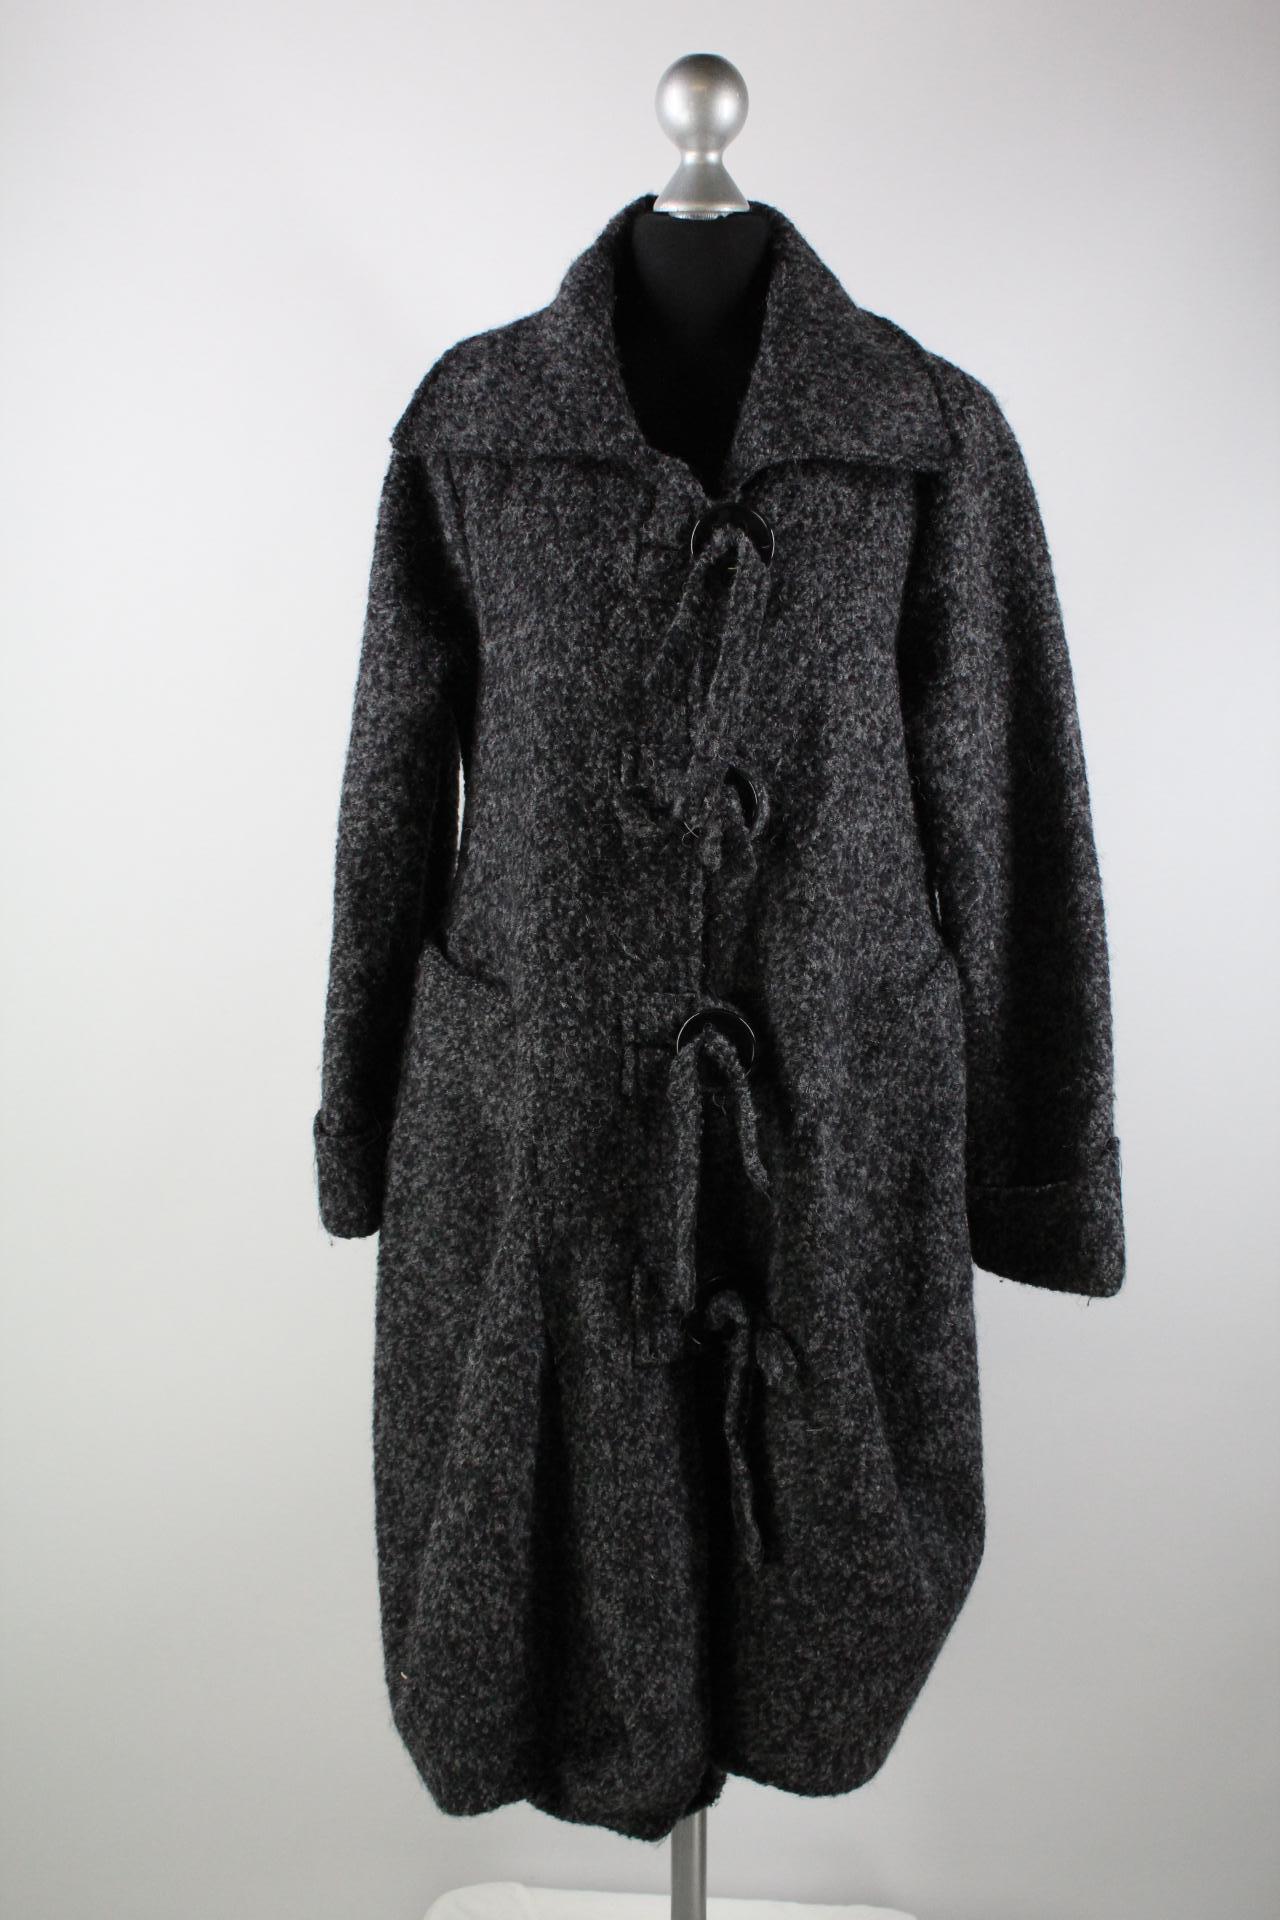 Swetissima Damen-Mantel grau/schwarz Größe XL